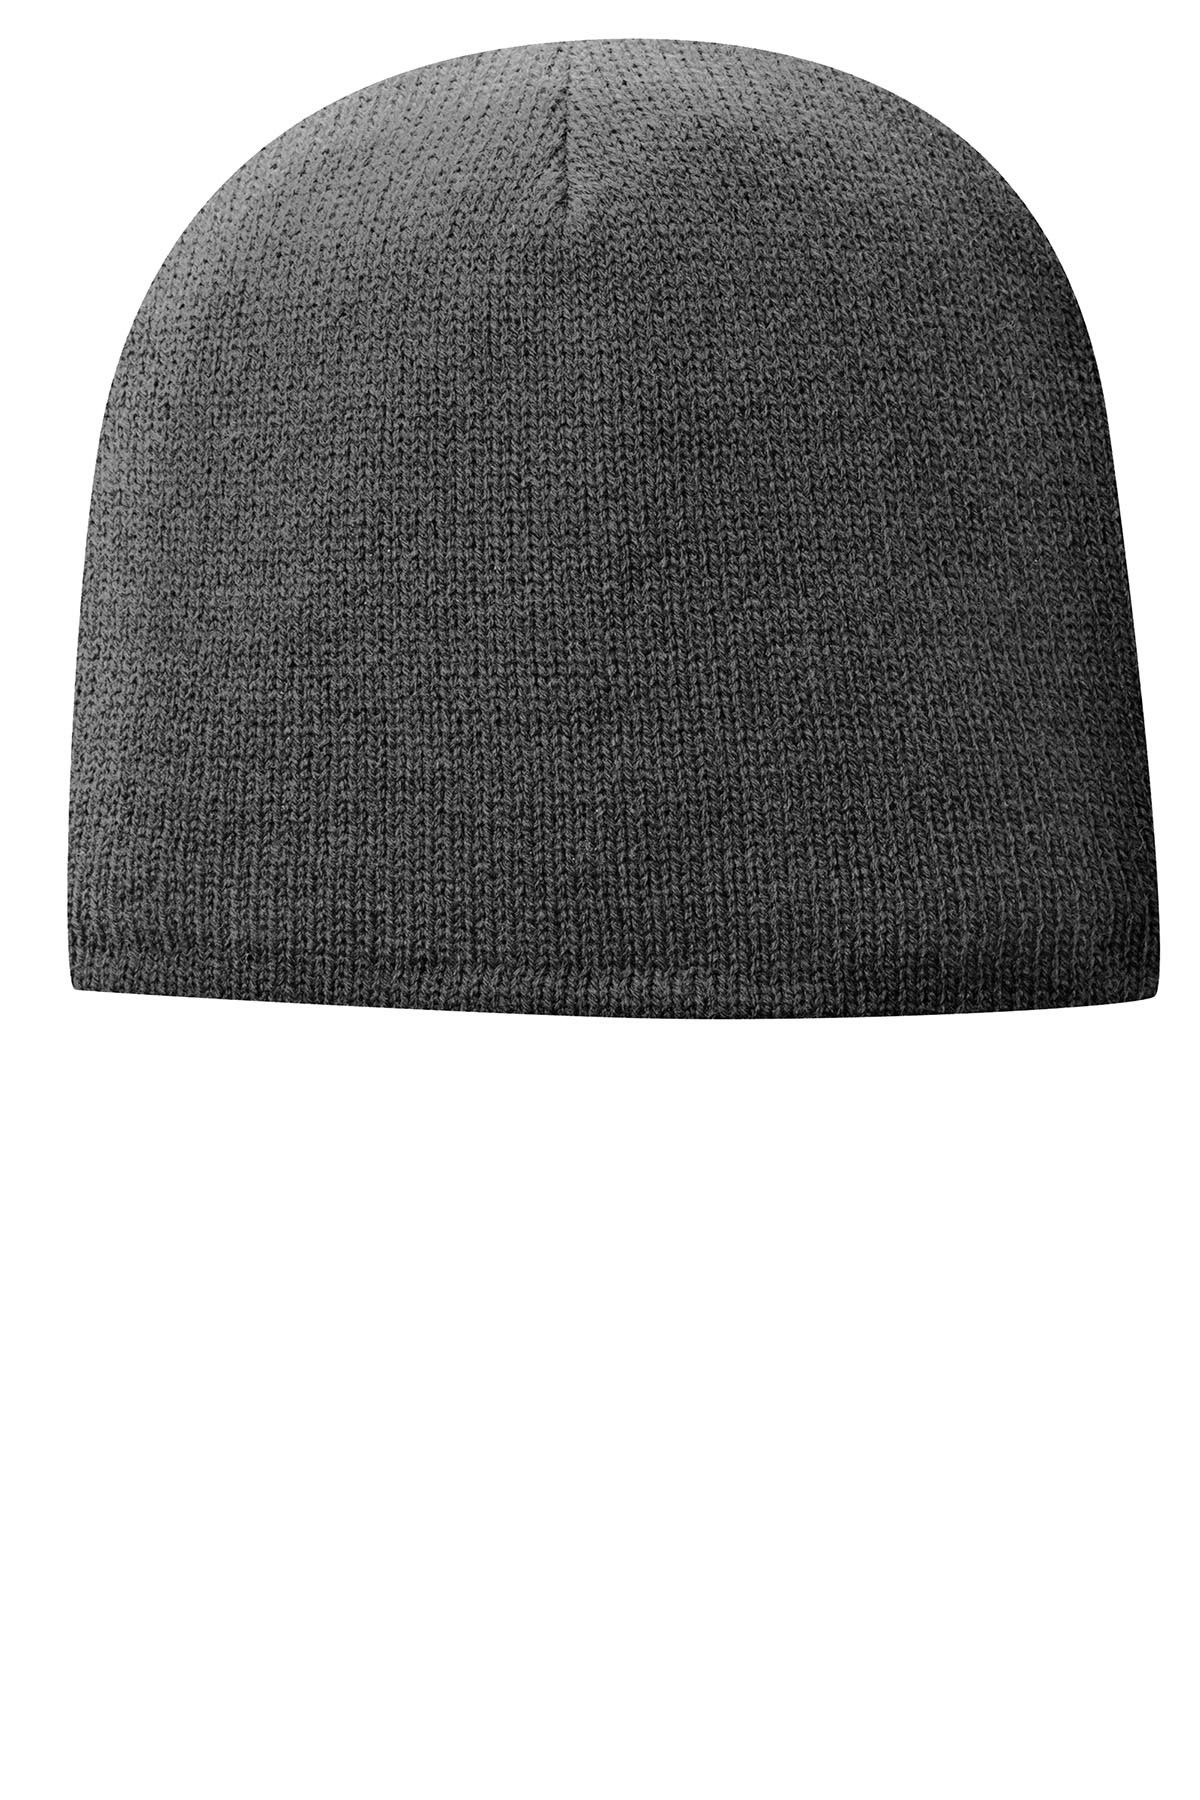 Port & Company® Fleece-Lined Beanie Hat